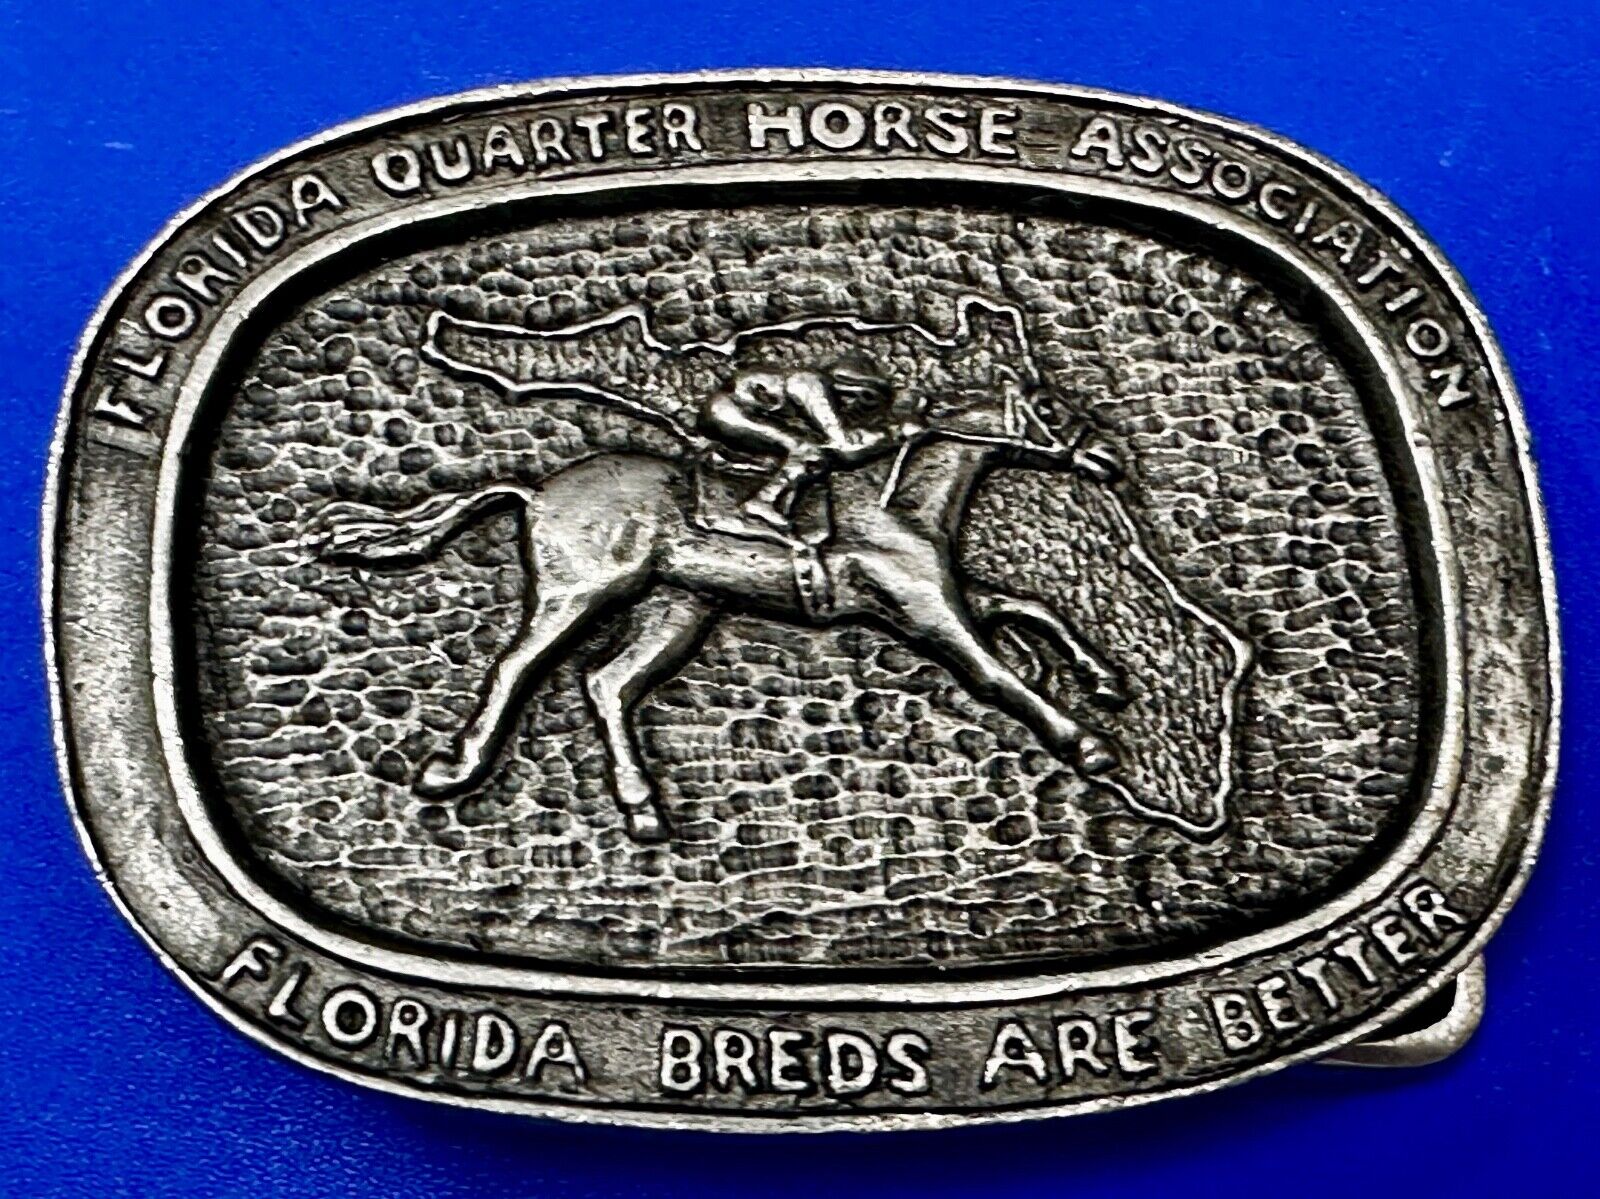 Florida Horse Breeds Are Better Riding Race Vintage Metzke 1981 Belt Buckle